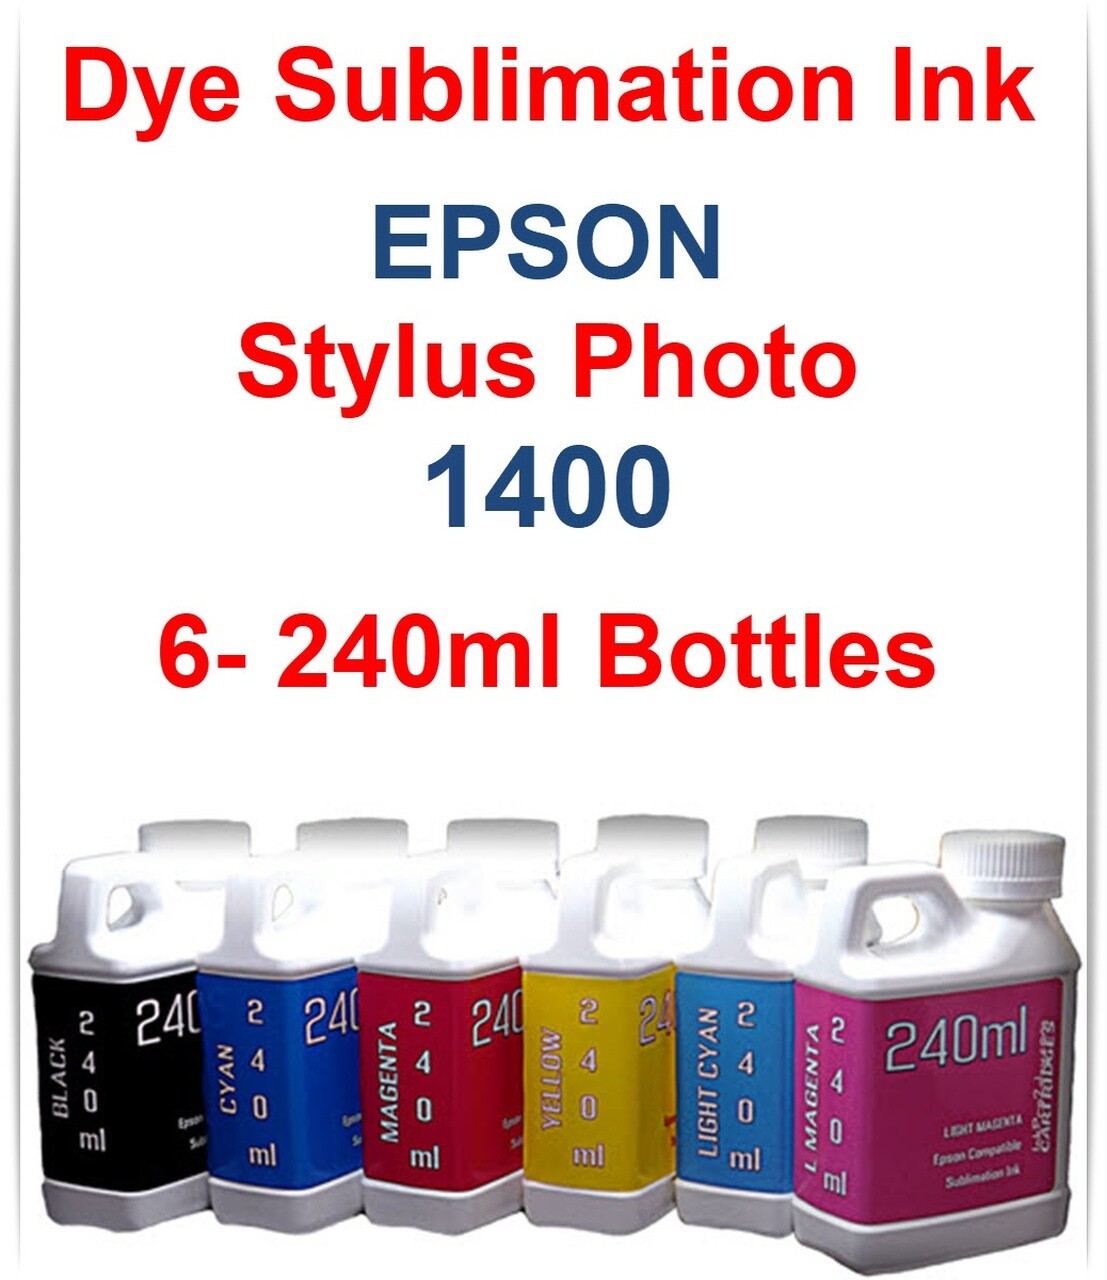 Dye Sublimation Ink 6- 240ml bottles for Epson Stylus Photo 1400 Printer